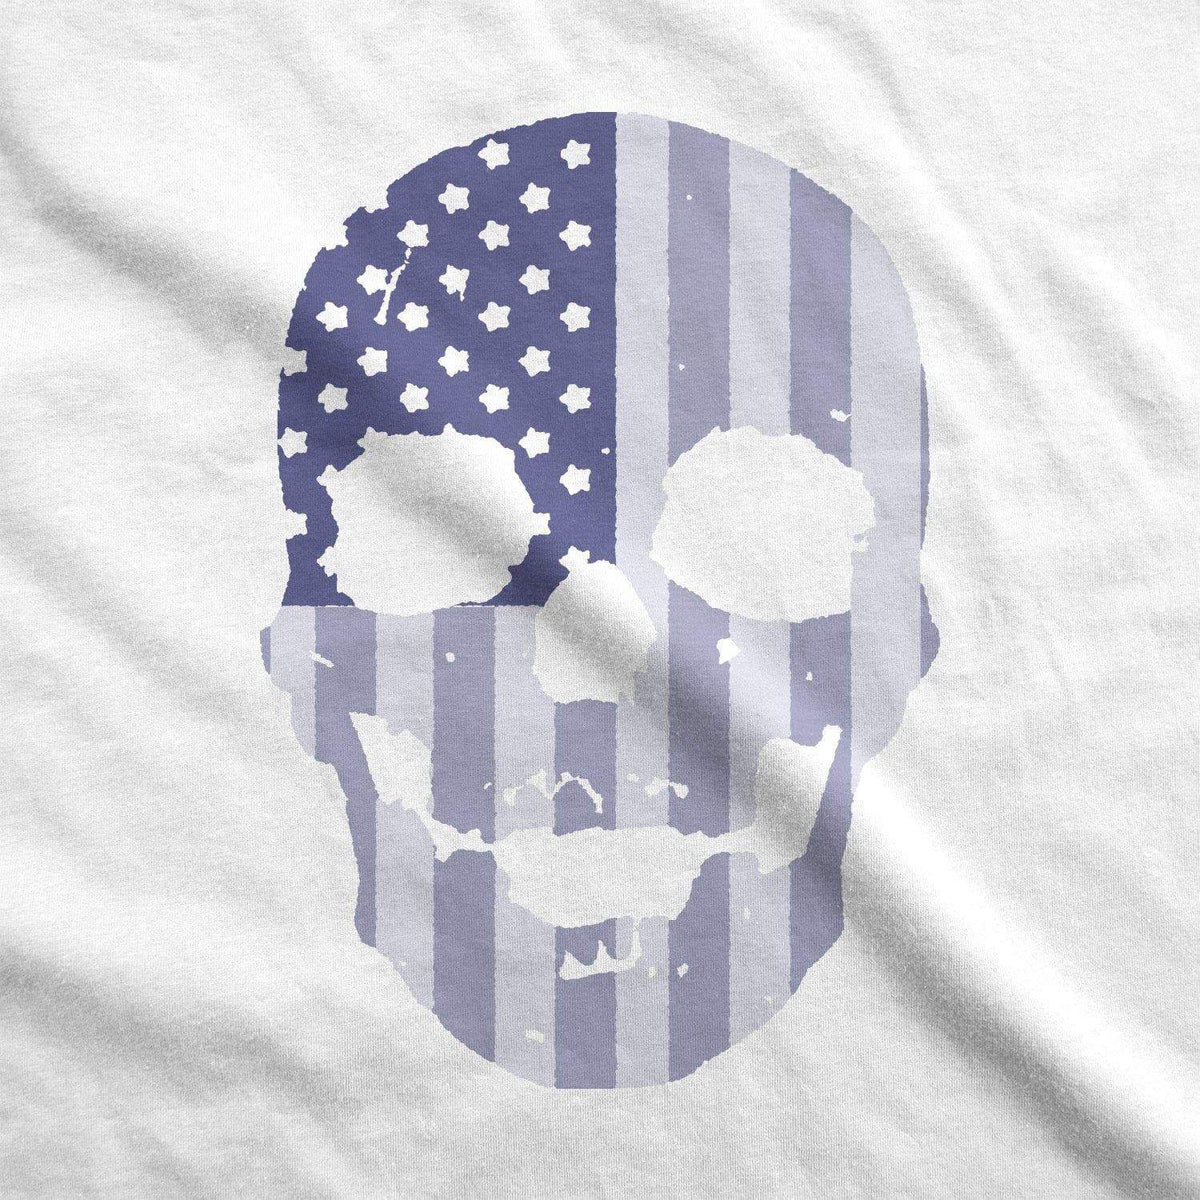 Flag Skull Men&#39;s Tank Top  -  Crazy Dog T-Shirts